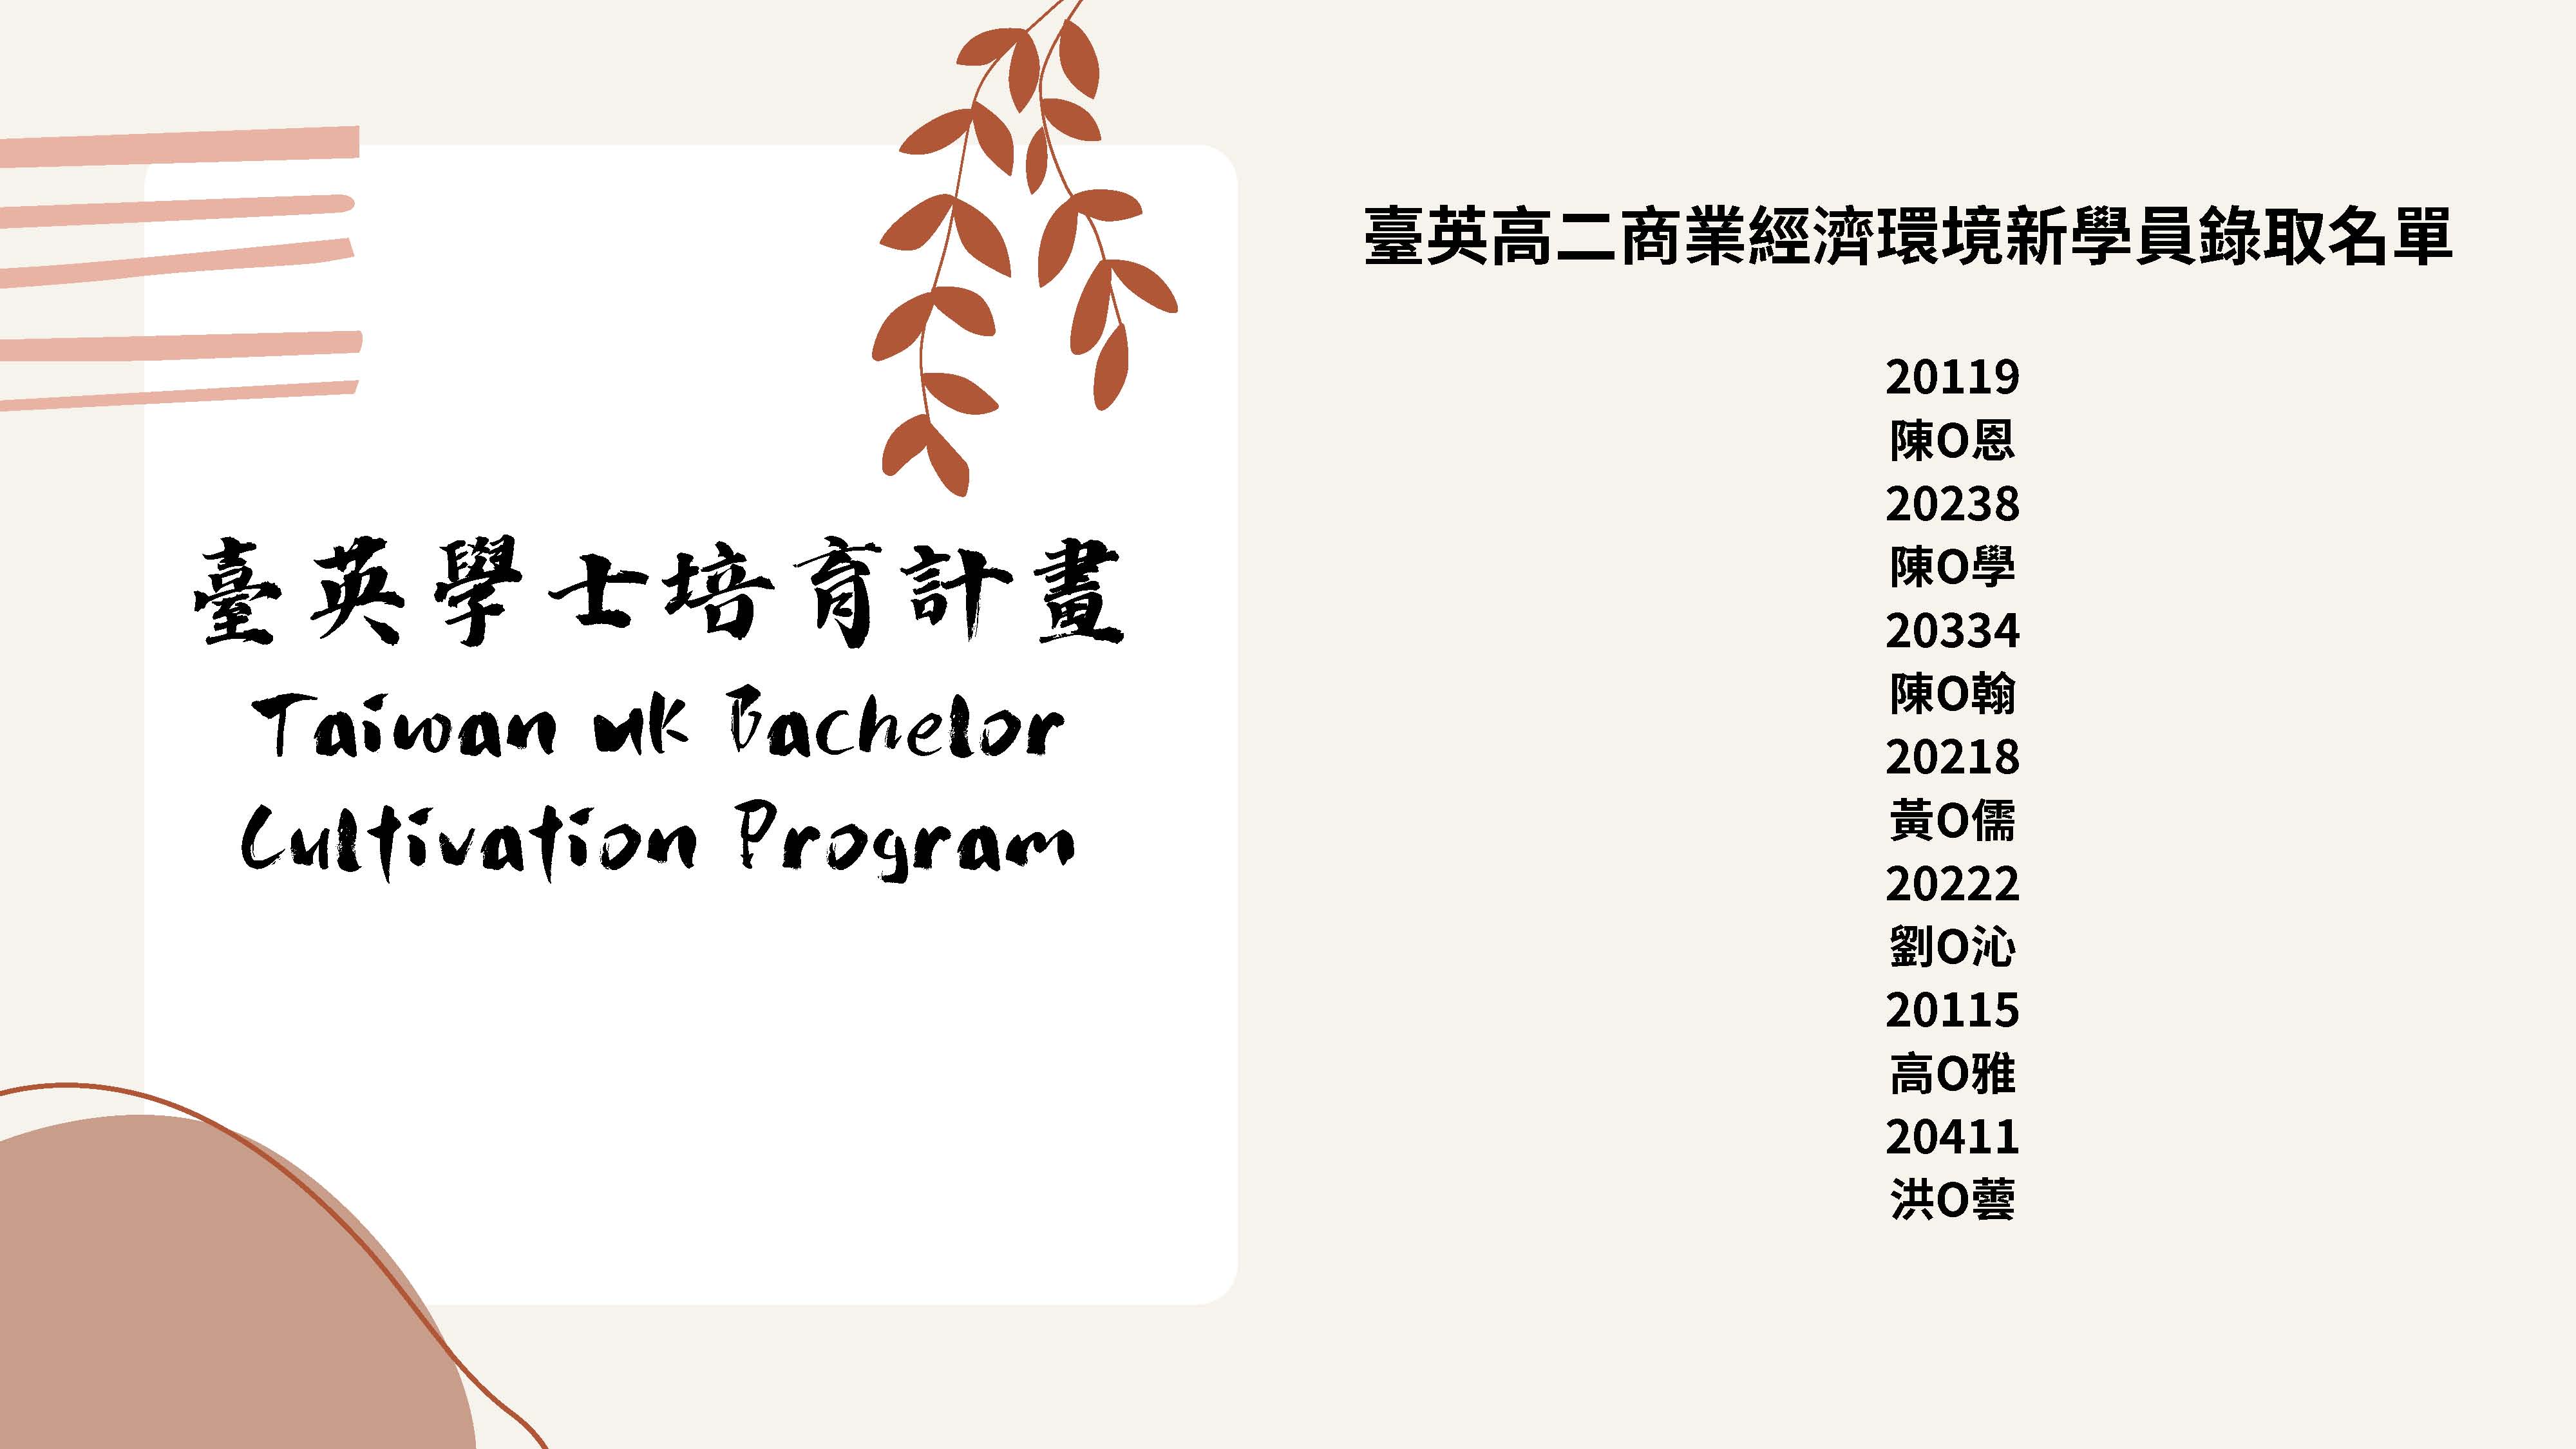 臺英學士培育計畫 Taiwan UK Bachelor Cultivation Program (2)高二新學員